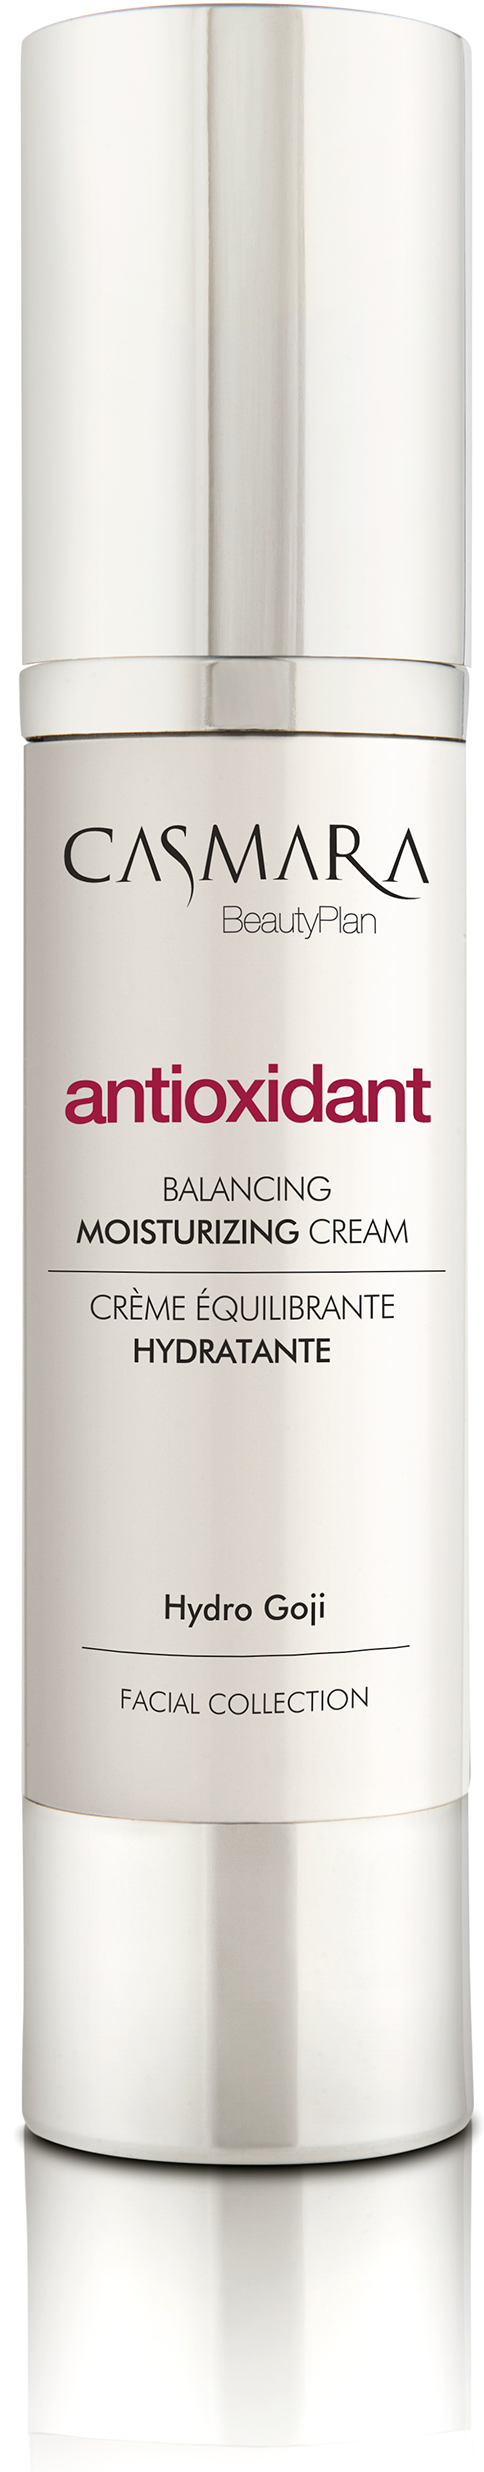 Balancing Moisturizing Cream